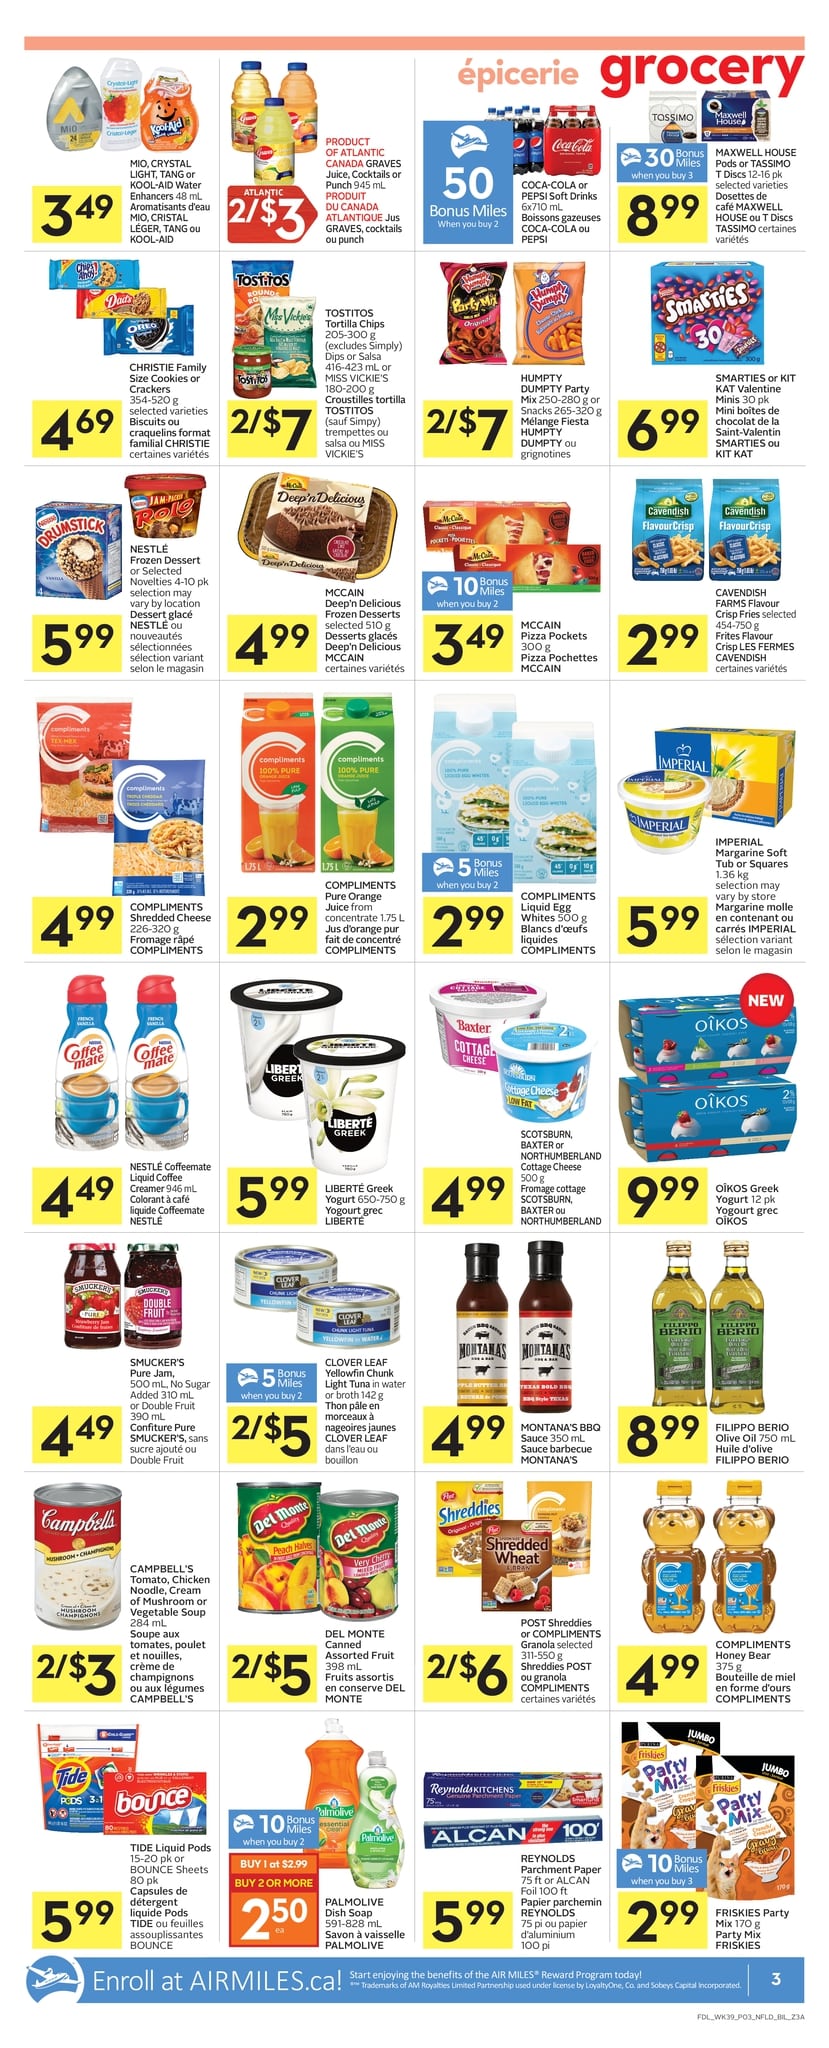 Foodland - Weekly Flyer Specials - Page 5